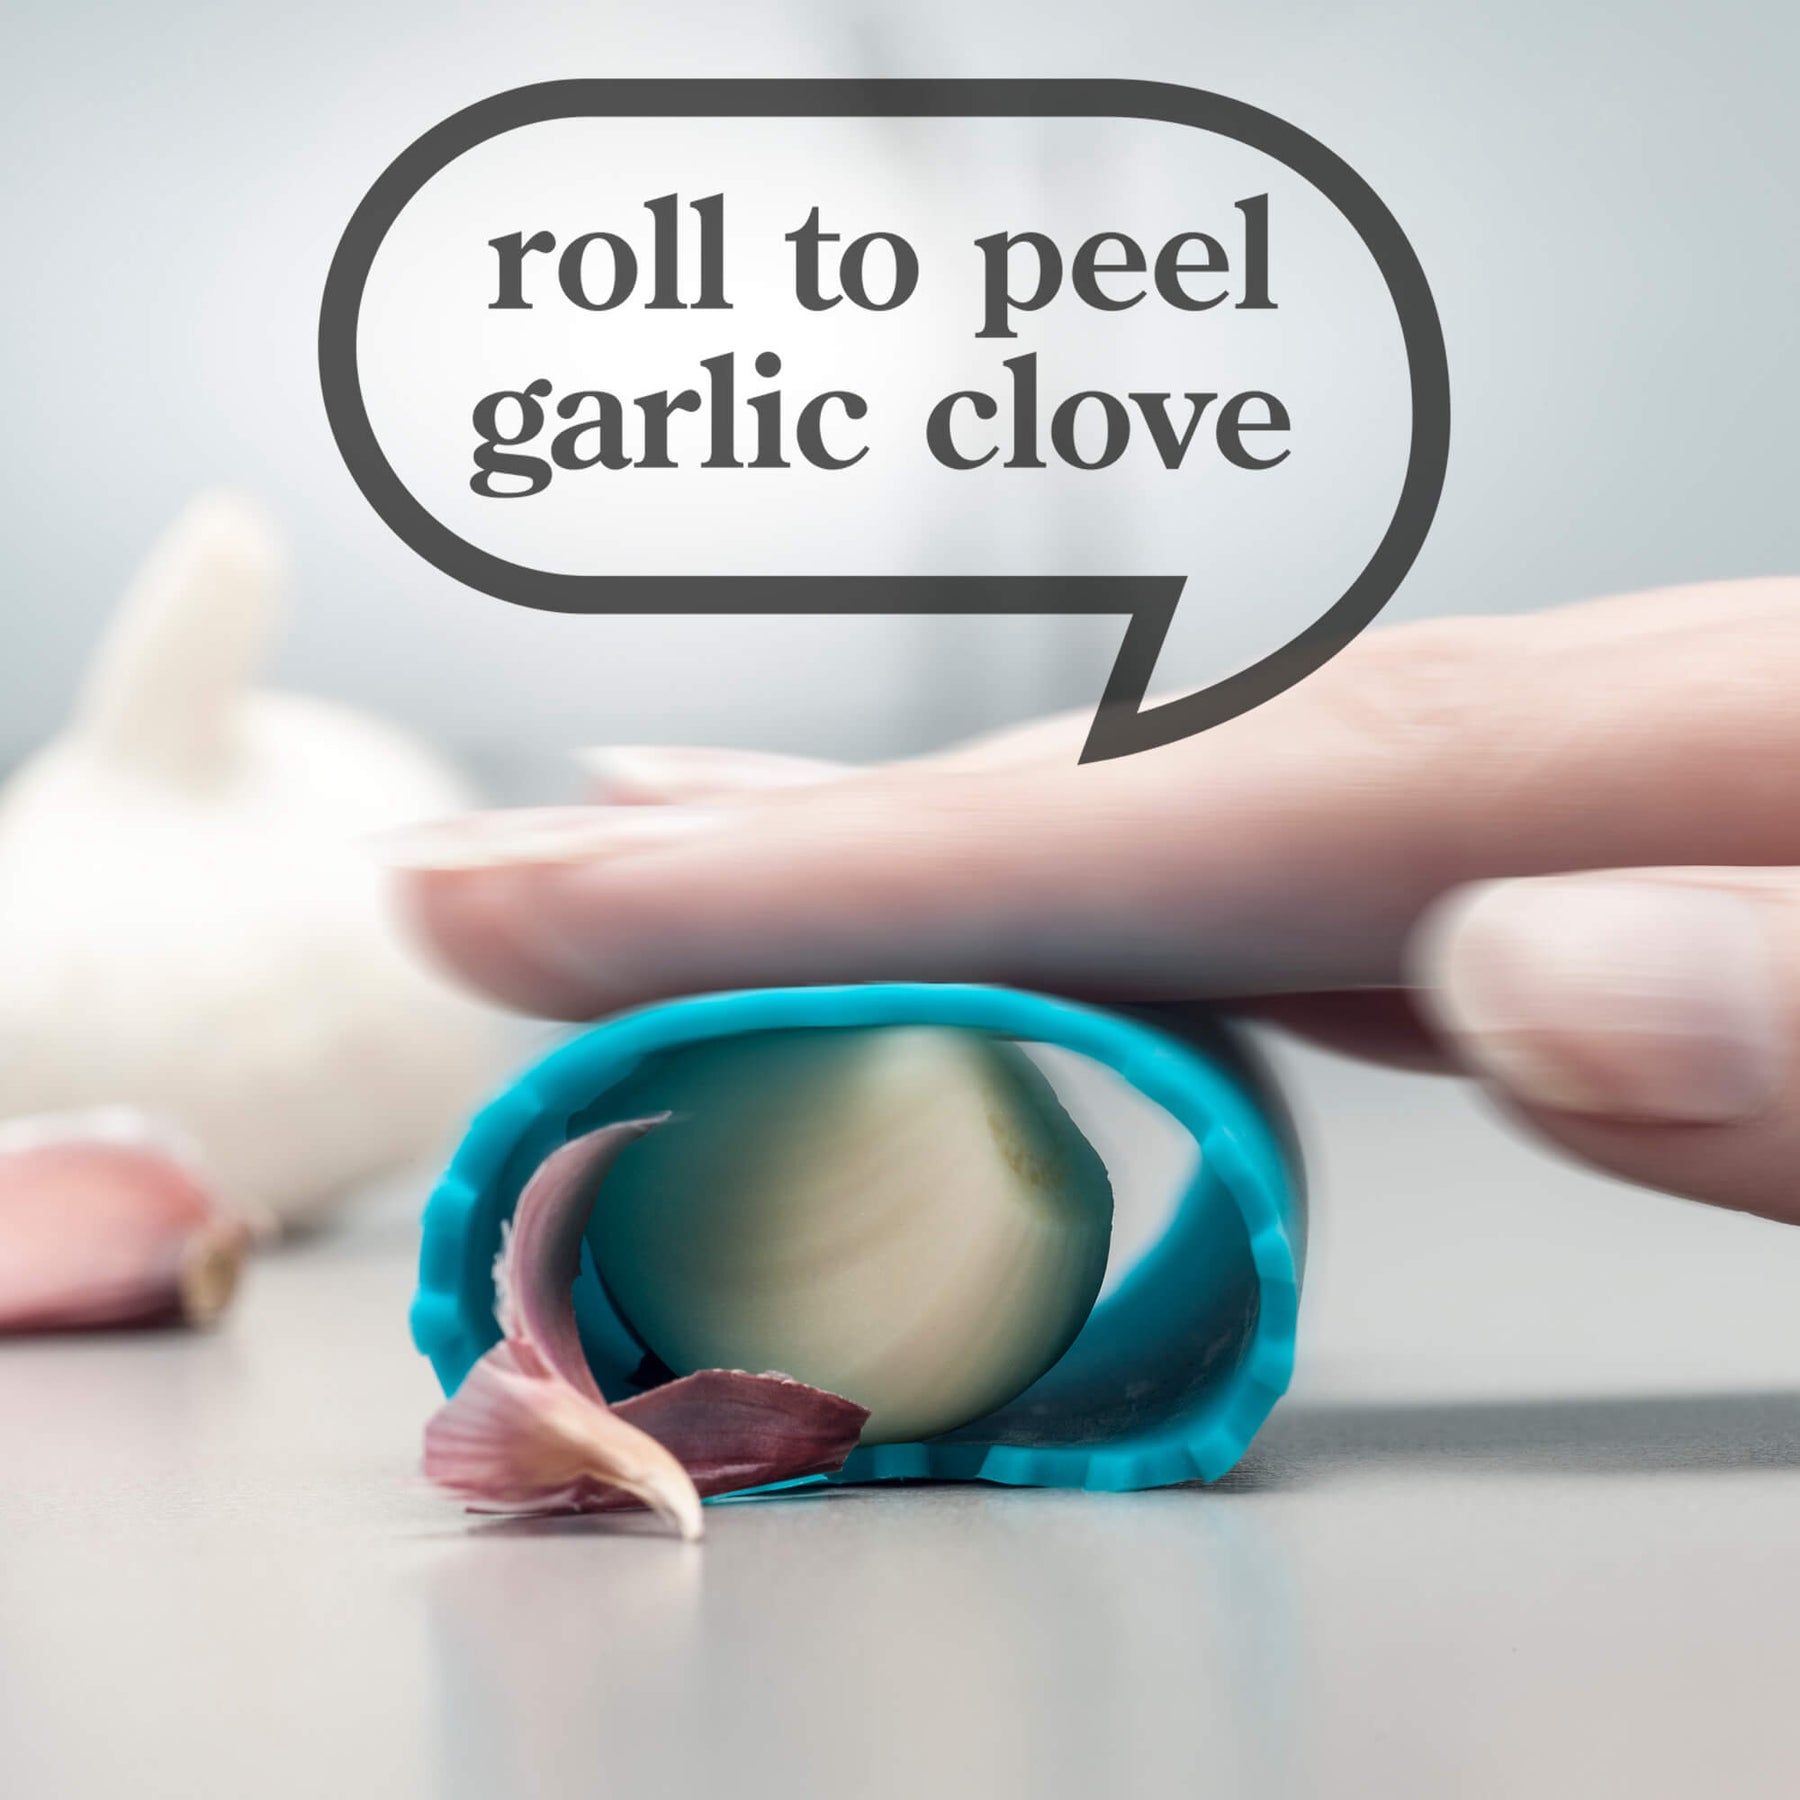 Silicone Garlic Peeler